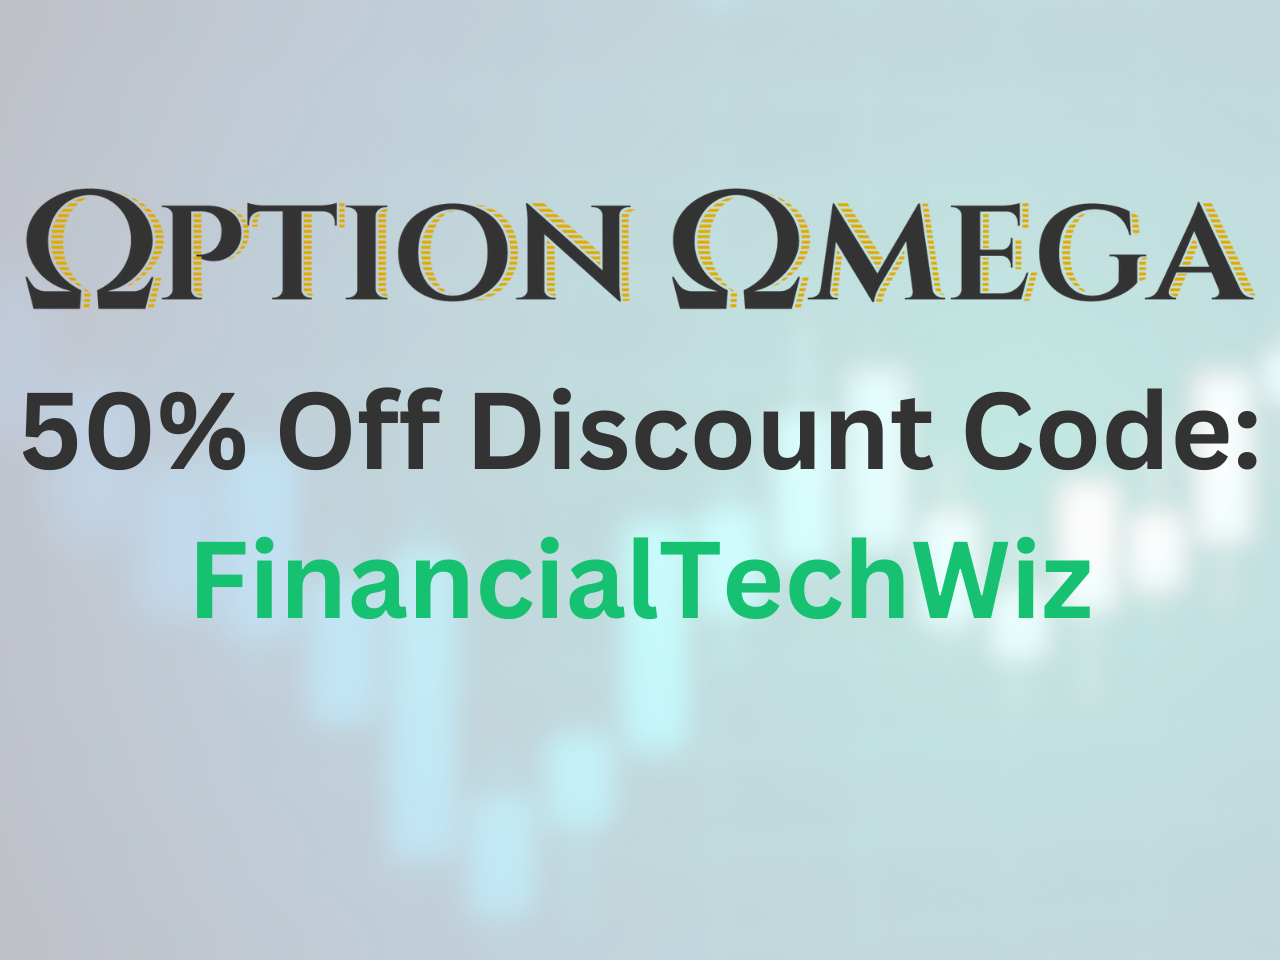 option omega discount code: FinancialTechWIz